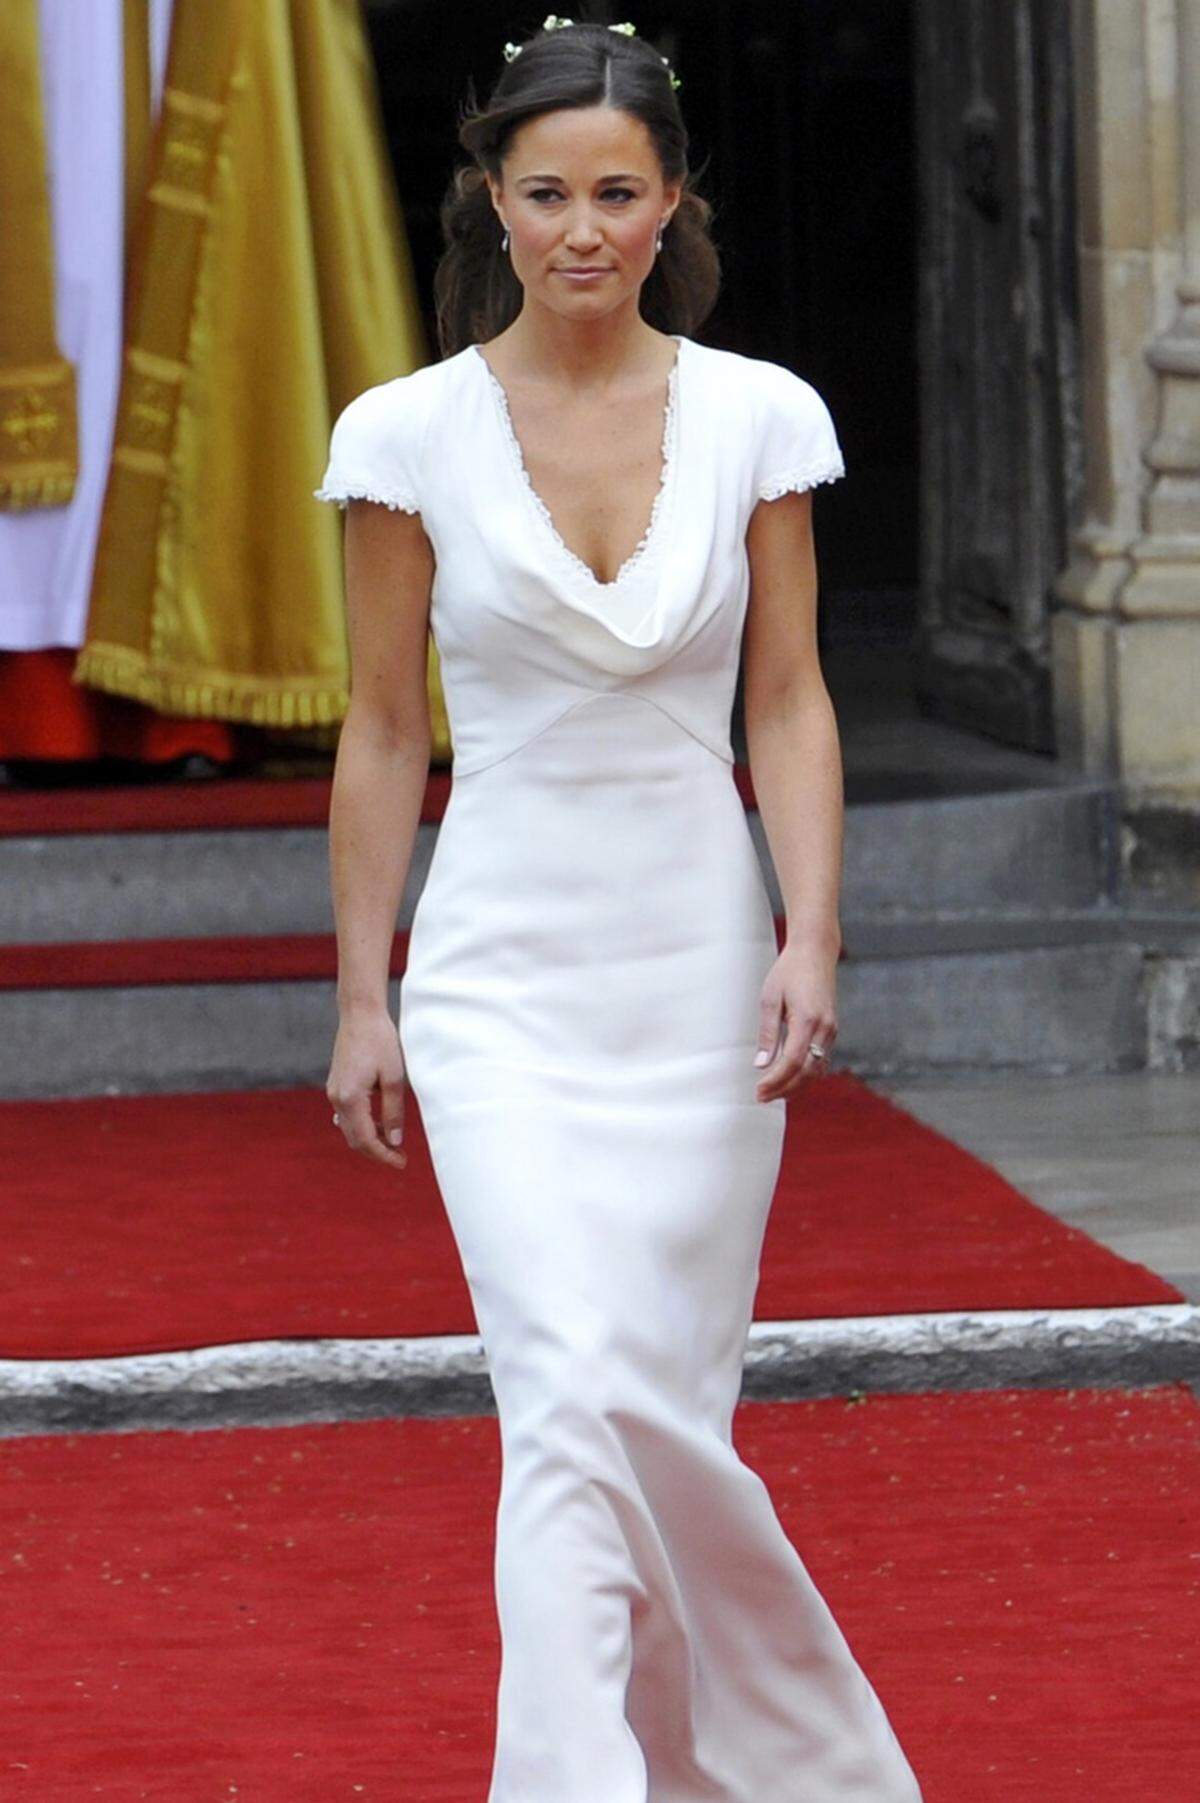 Pippa Middleton: Her Royal Hotness